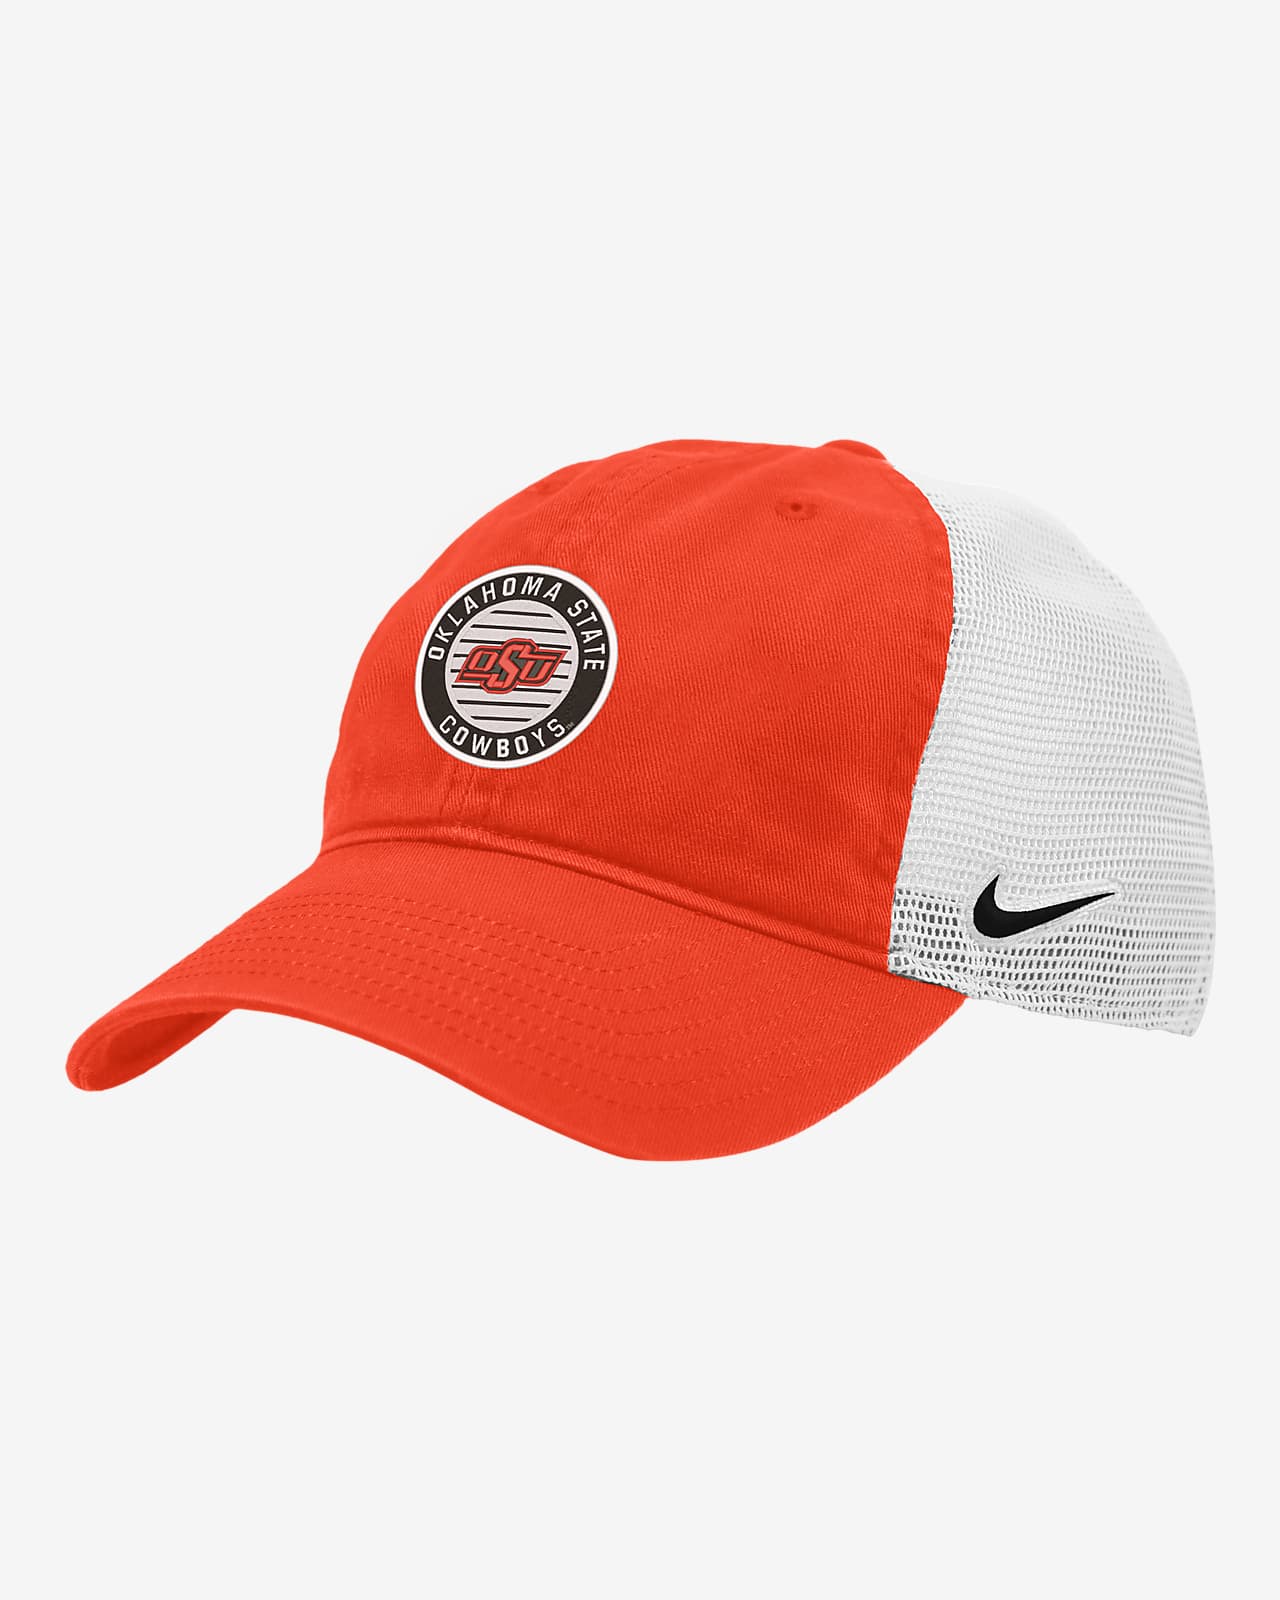 Oklahoma State Heritage86 Nike College Trucker Hat